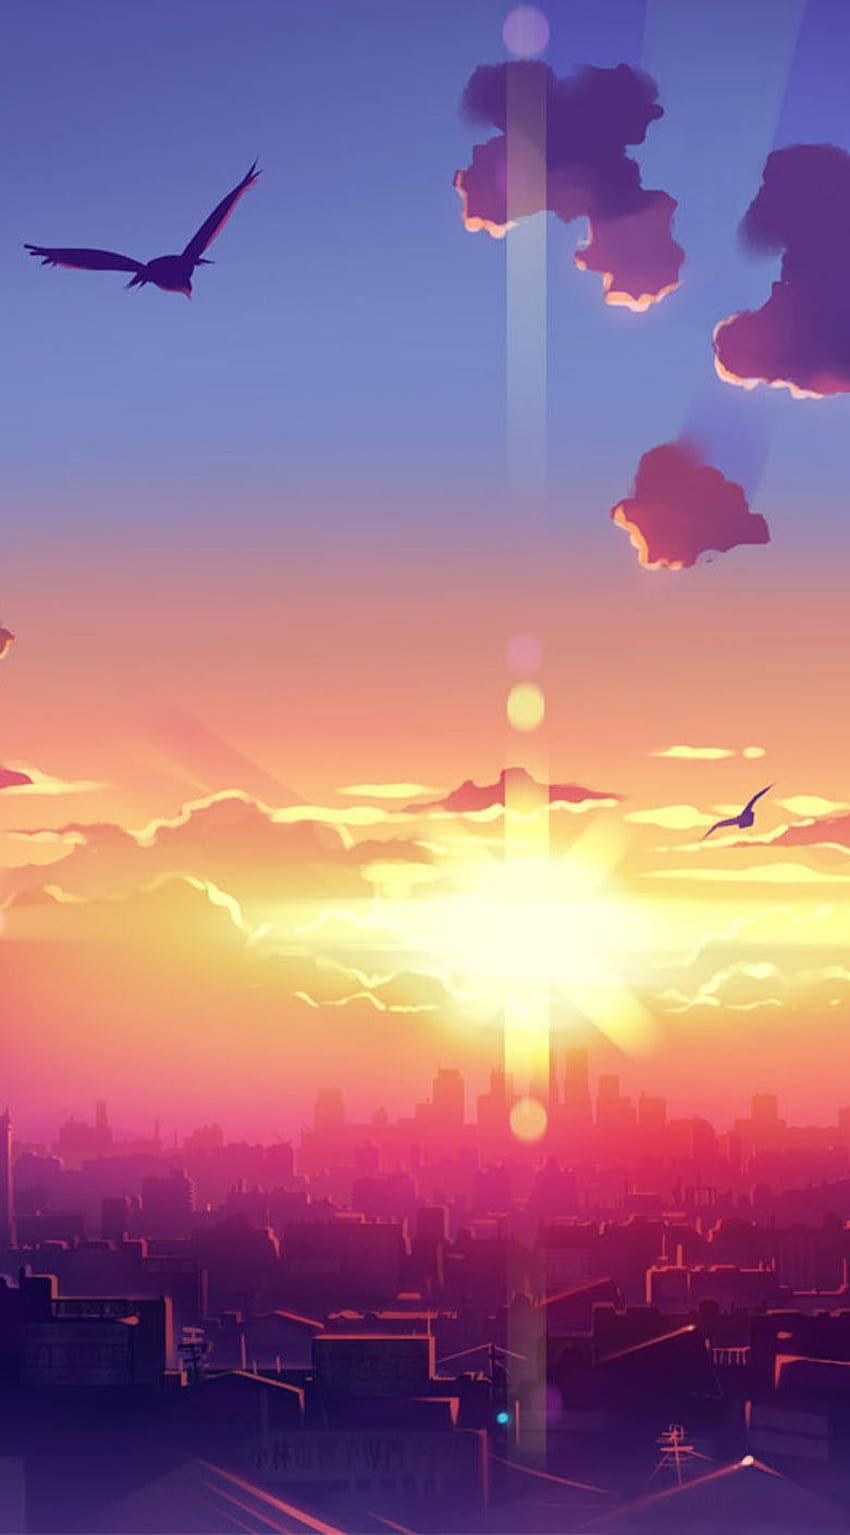 SunSet - Other & Anime Background Wallpapers on Desktop Nexus (Image  1470797)